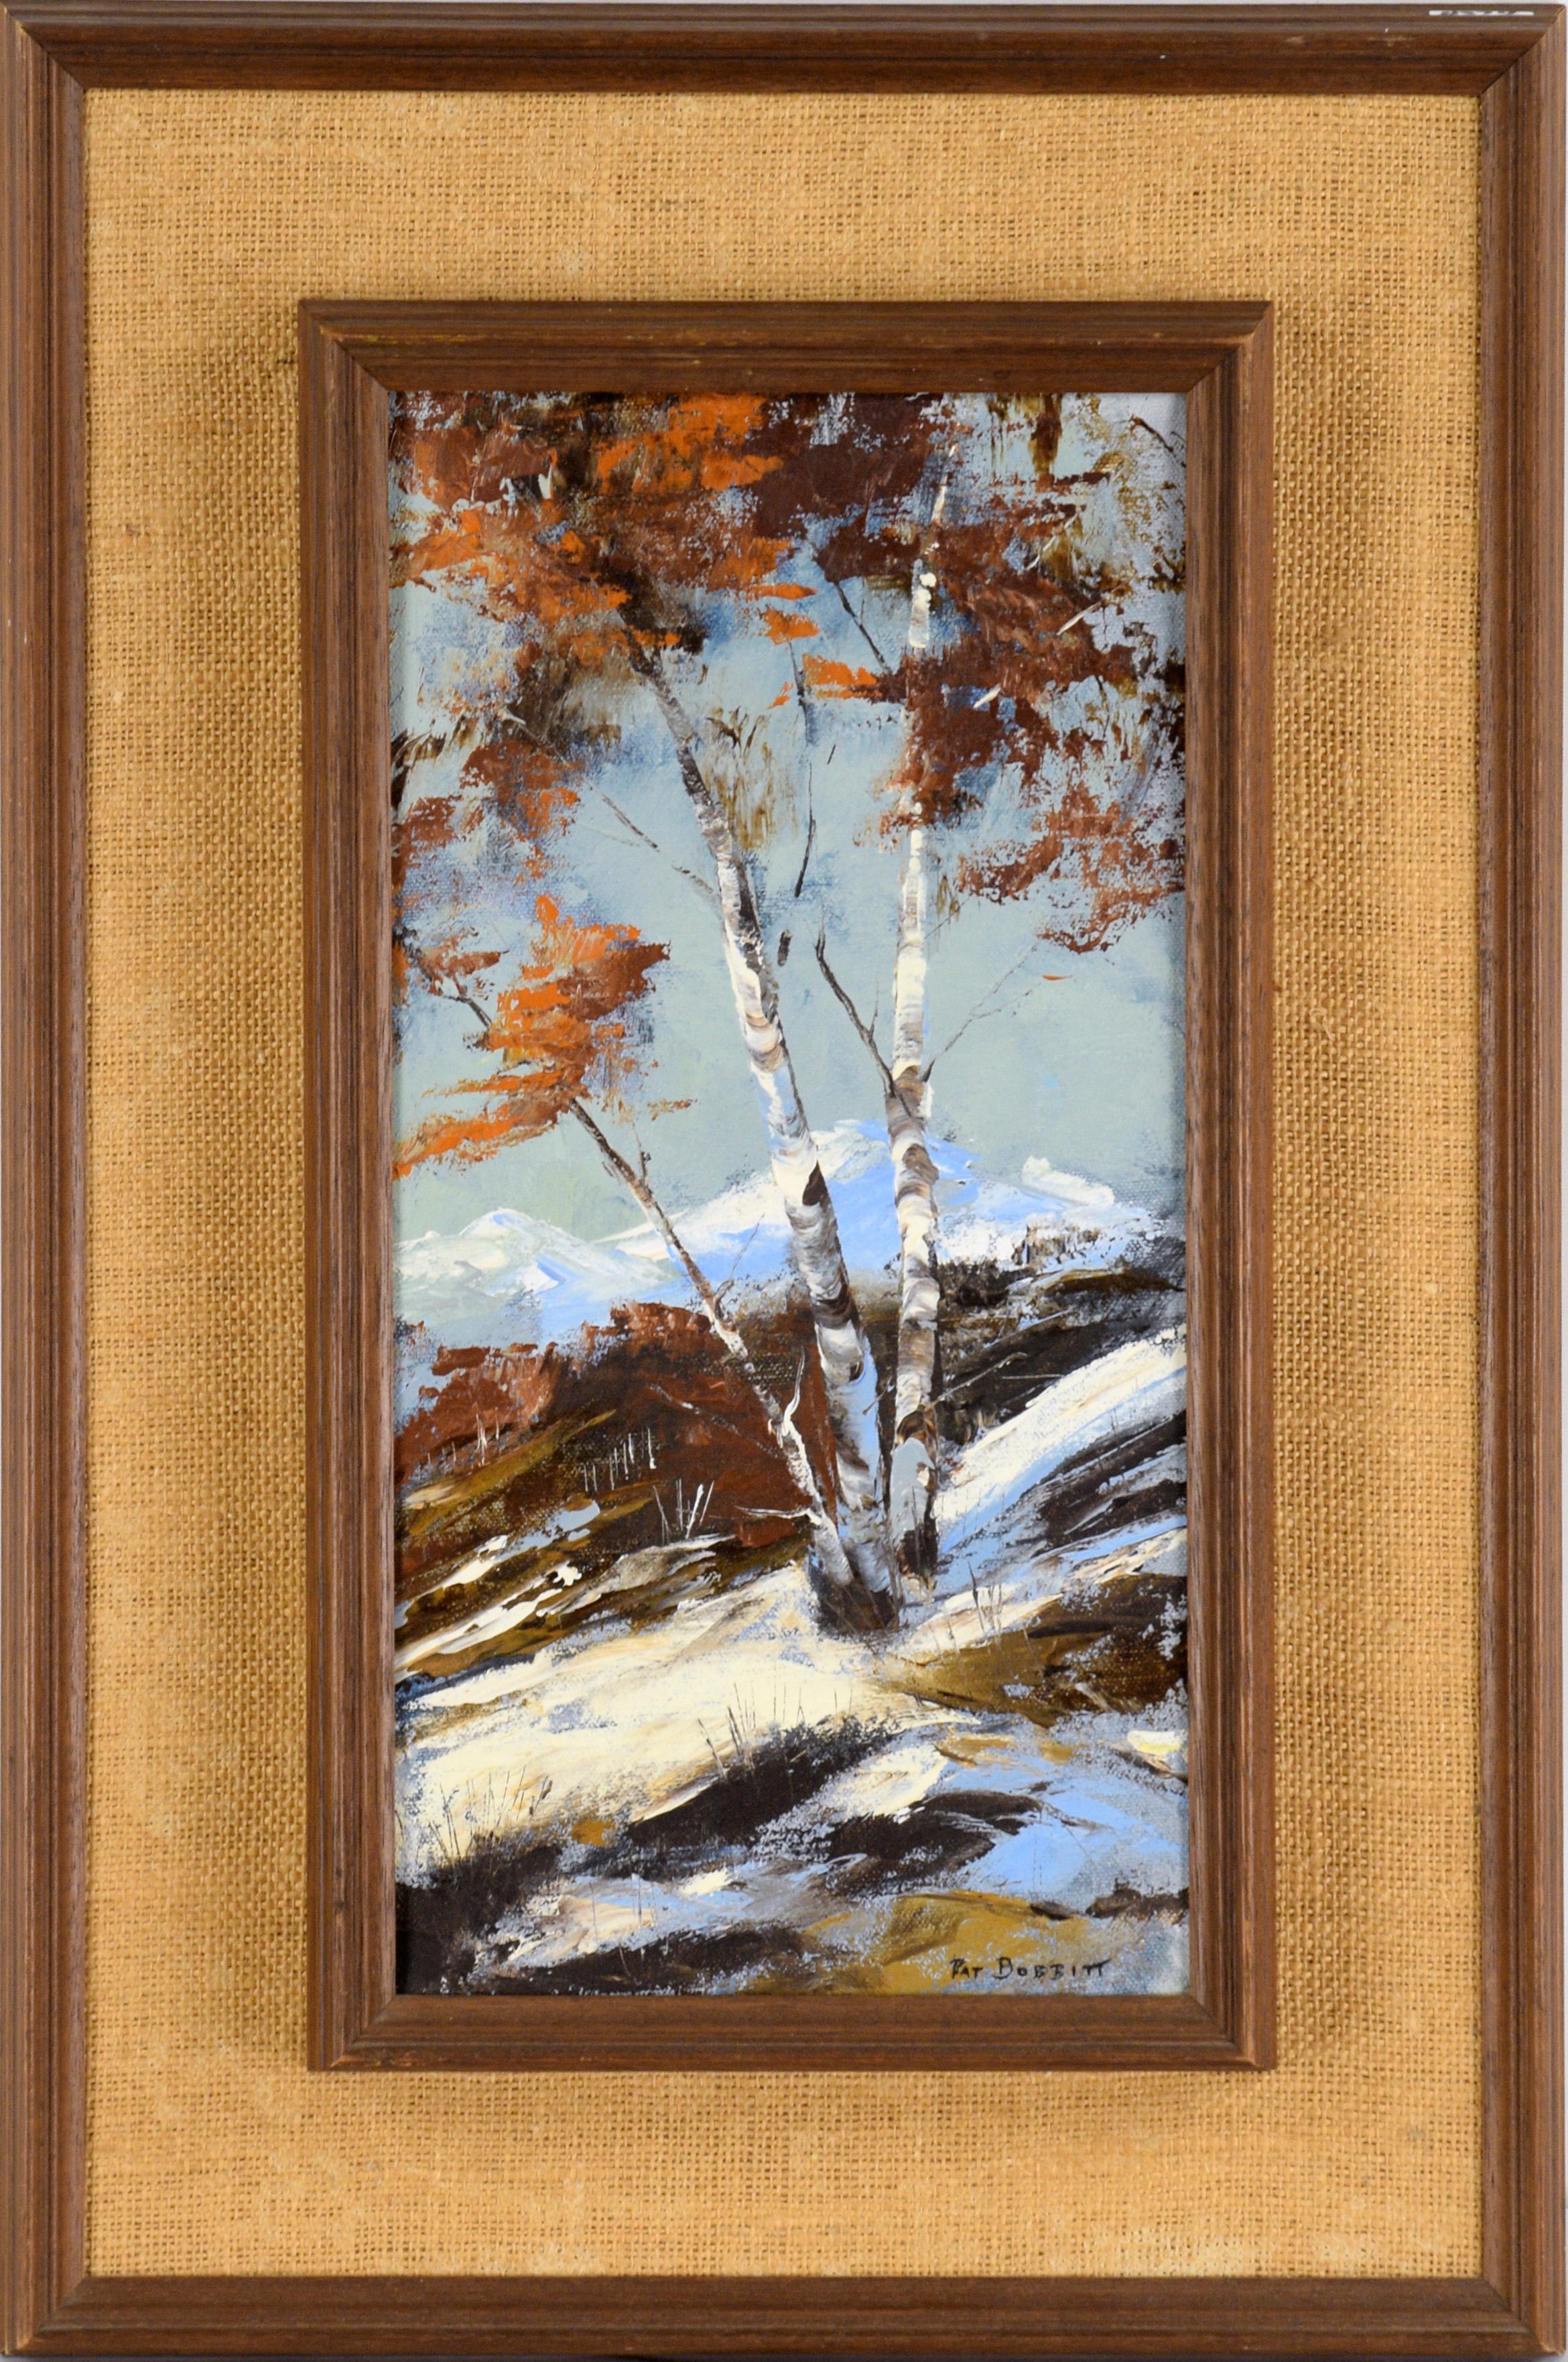 Pat Bobbitt Landscape Painting - "First Snow" Winter Landscape in Oil on Canvas